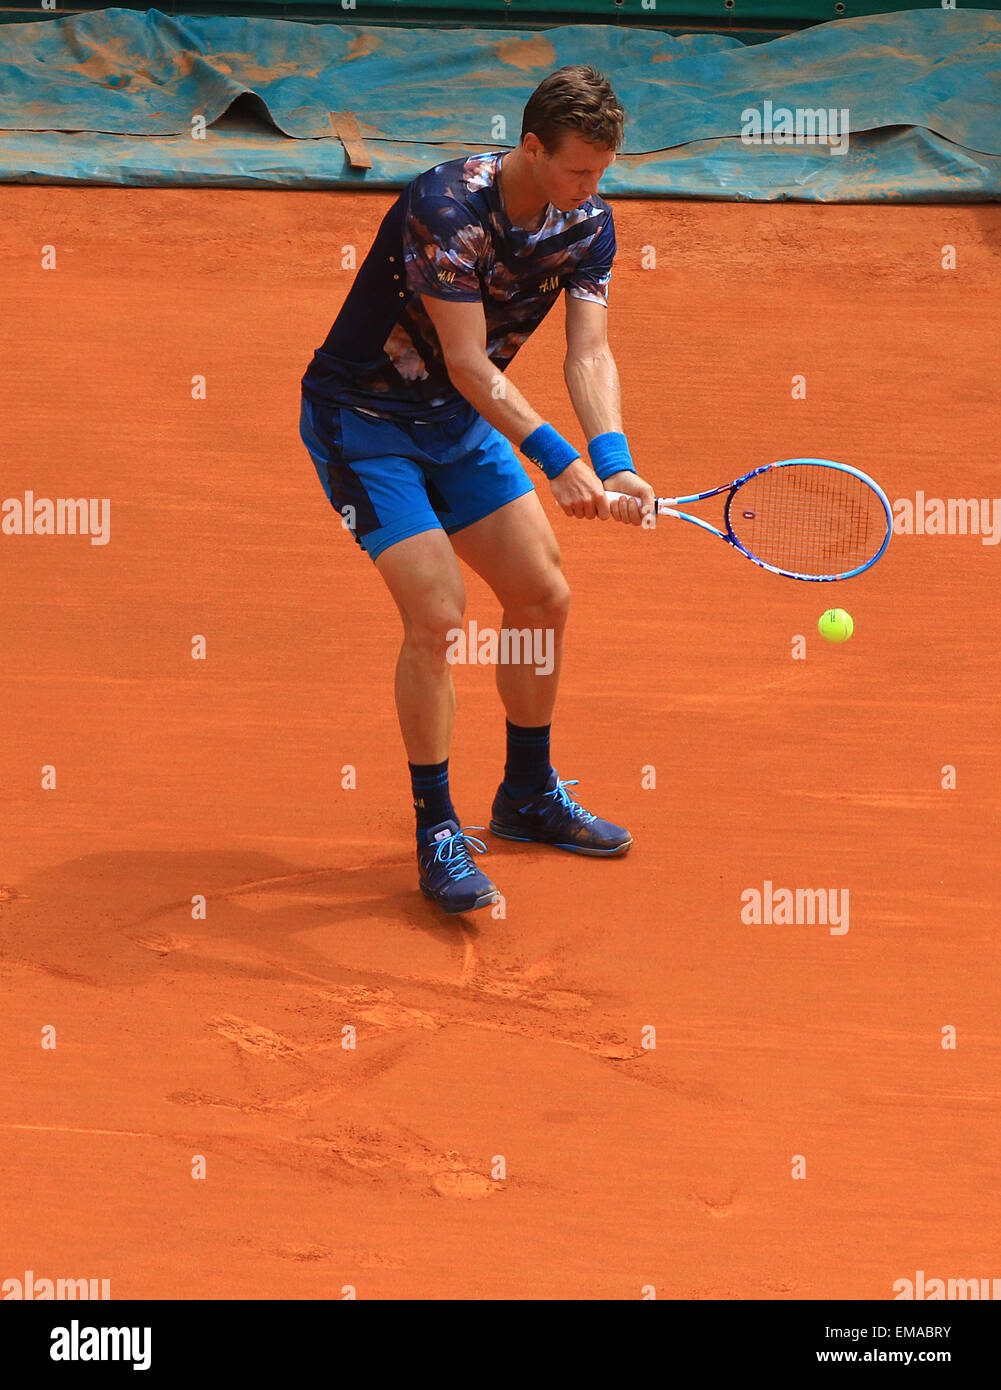 June 14, 2014 - 18.04.2015 Monte Carlo, Monaco, Tomas Berdych beats Gael  Monfils 6-1, 6-4 in the semi-finals of the ATP Tennis Monte-Carlo Rolex  Masters played at the Monte Carlo Country Club,